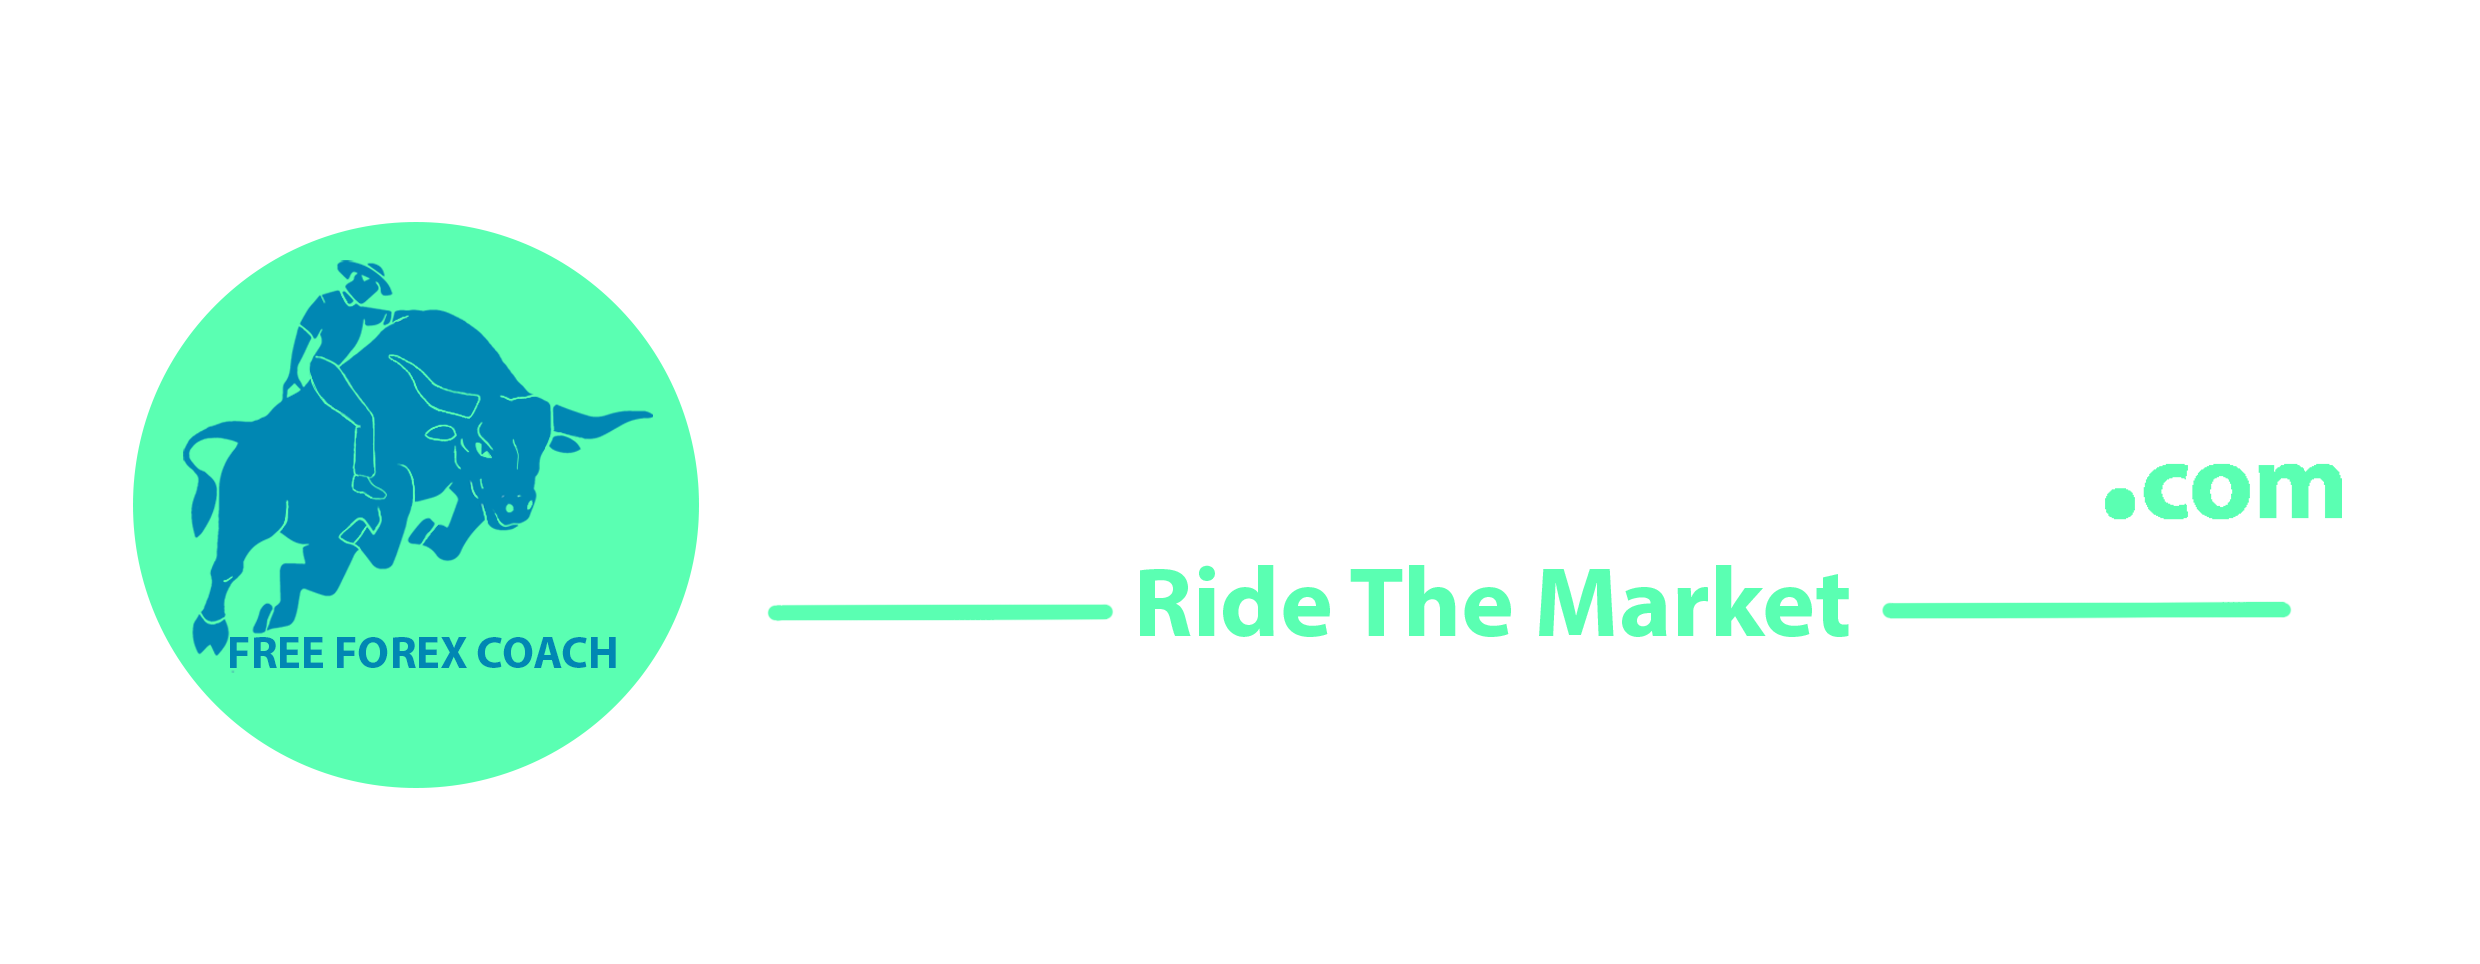 Free forex coach